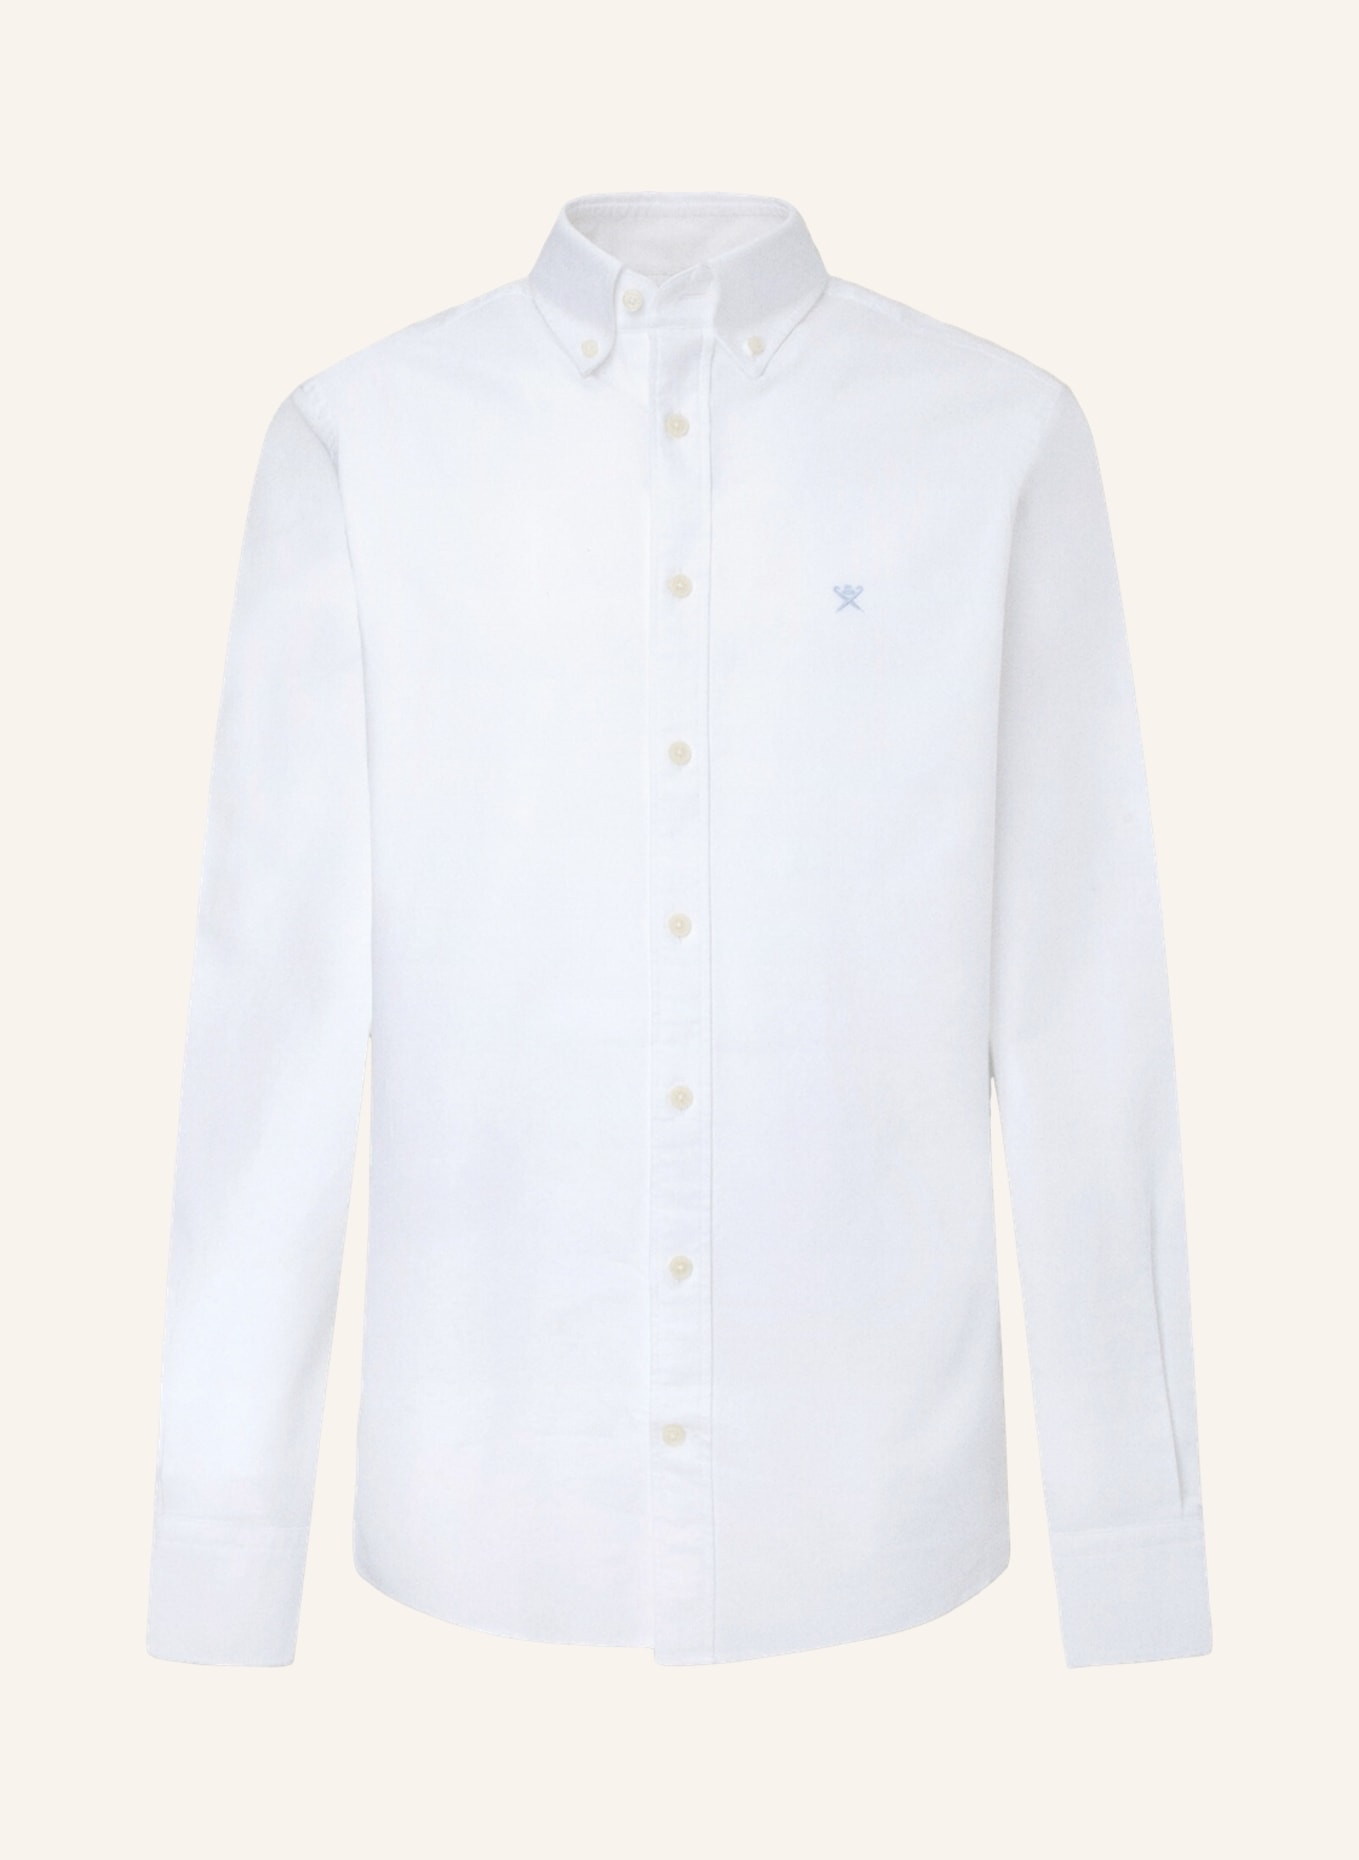 HACKETT LONDON Oxfordhemd Slim Fit, Farbe: WEISS (Bild 1)